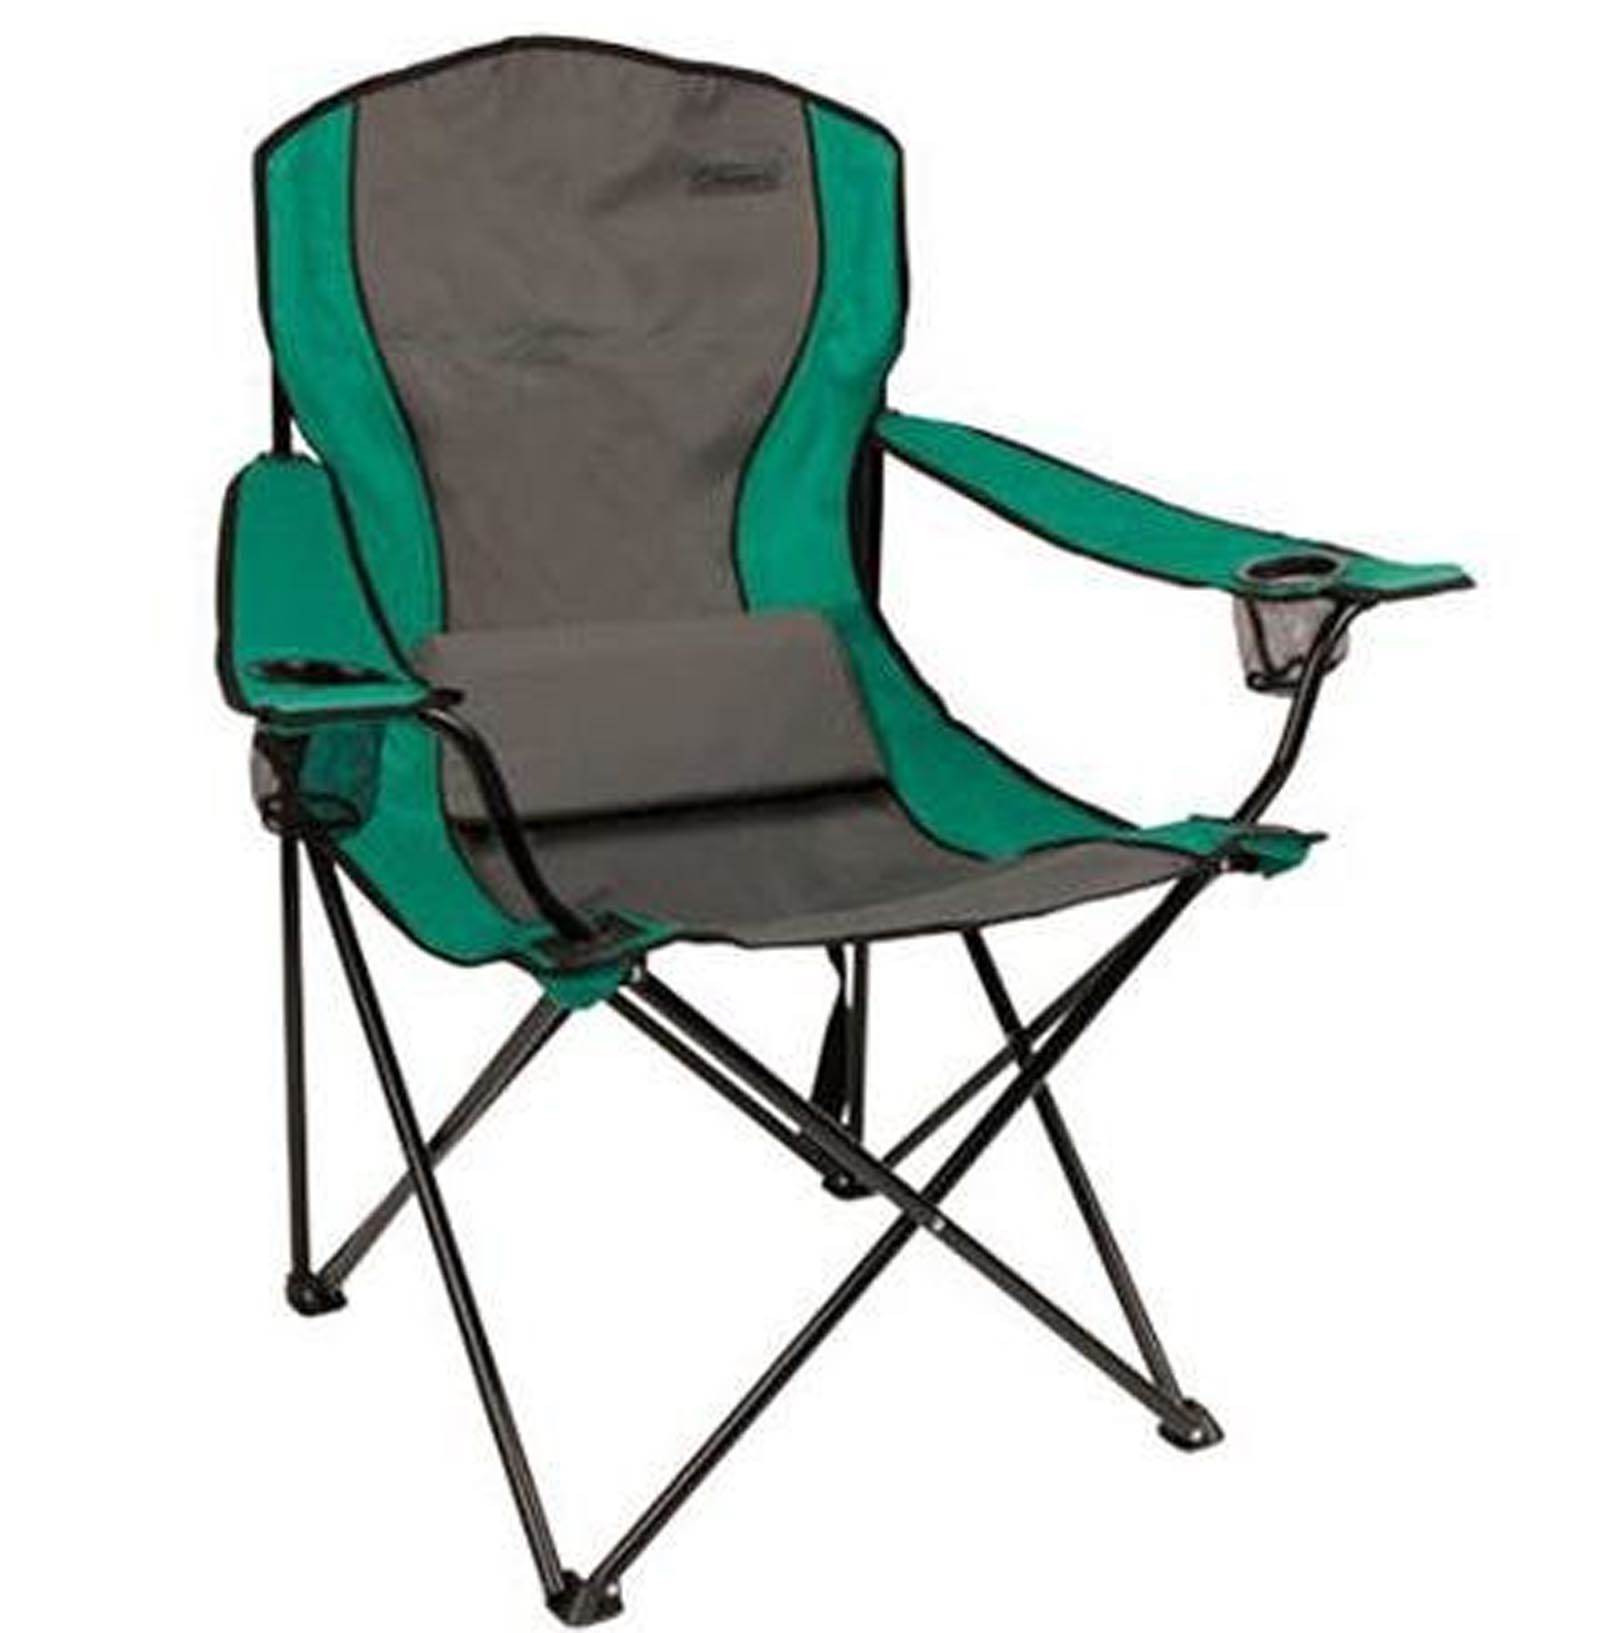 Coleman Green Lumbar Chair - image 1 of 2